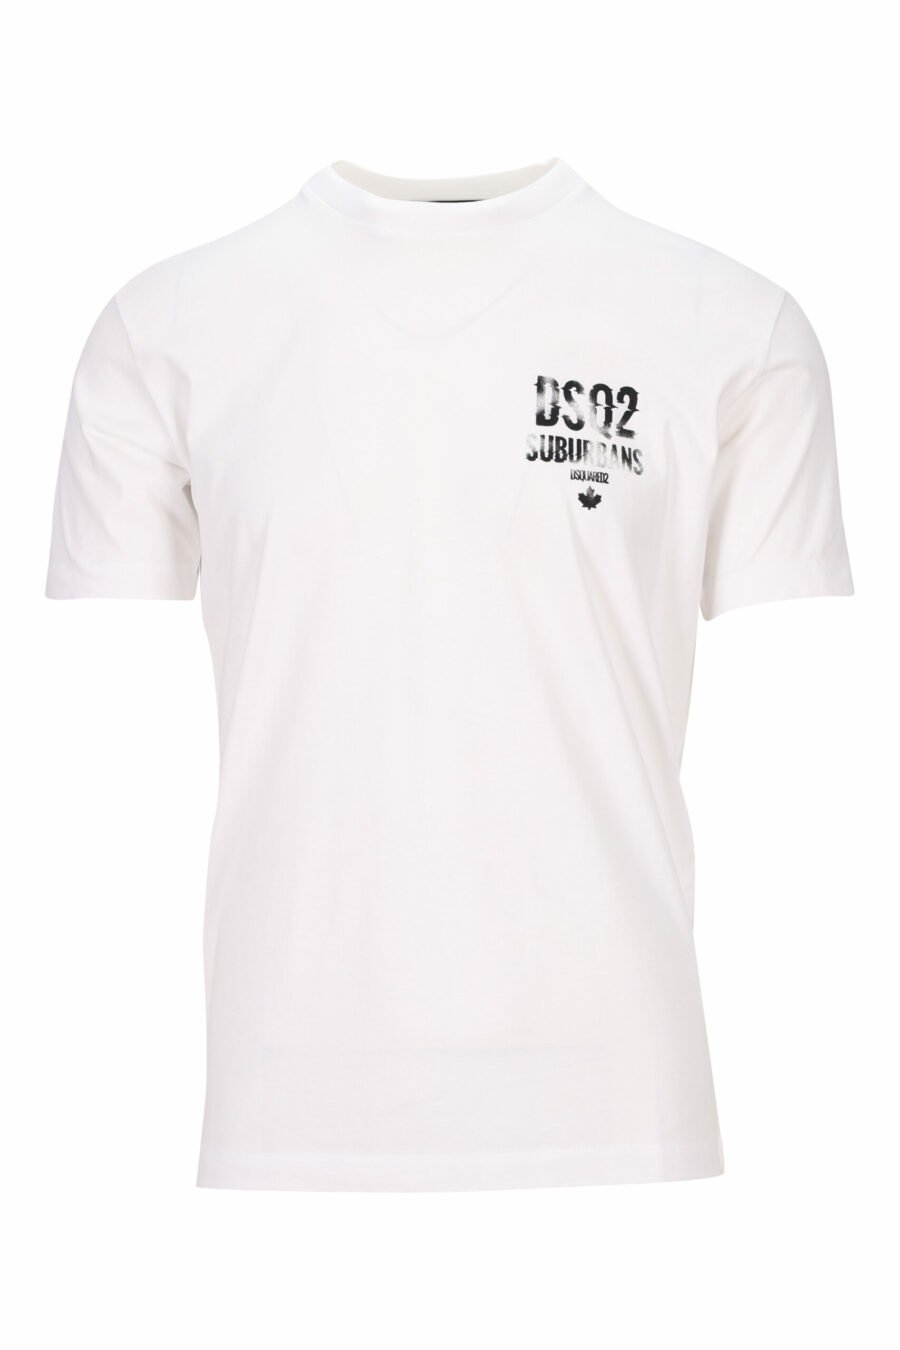 T-shirt branca com o mini-logotipo "suburbans" a preto - 8054148512842 scaled